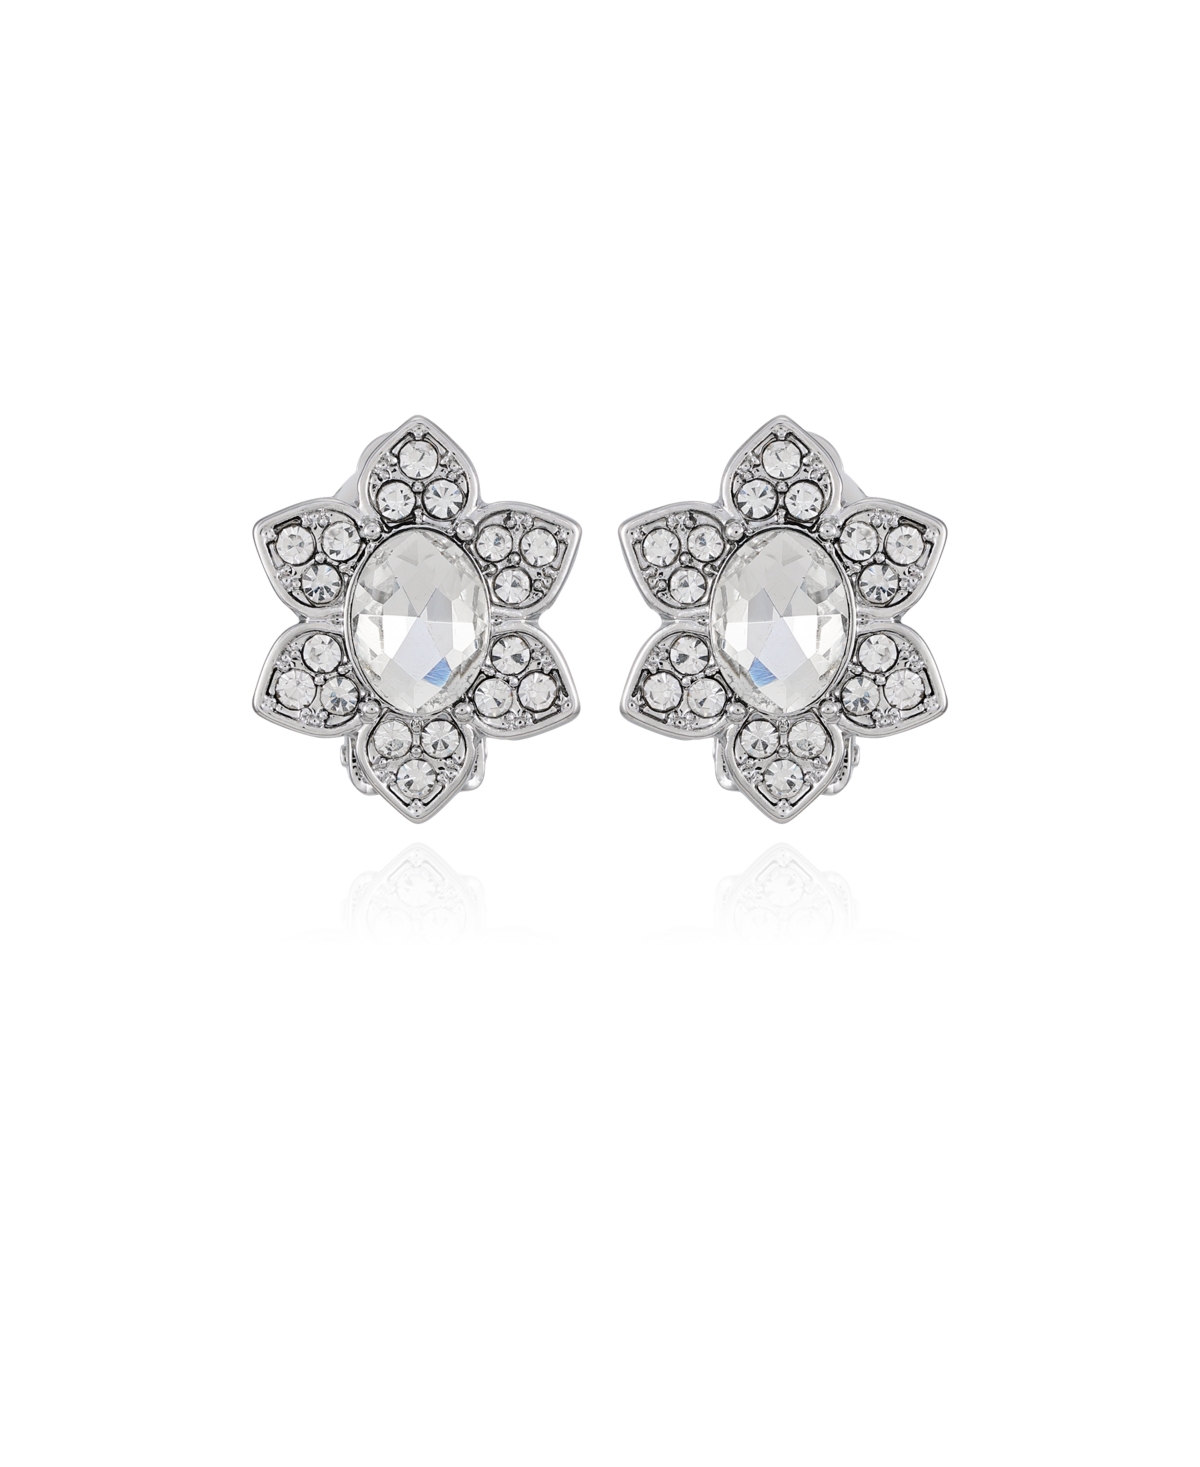 Silver-Tone Clear Glass Stone Flower Stud Clip-On Earrings - Silver